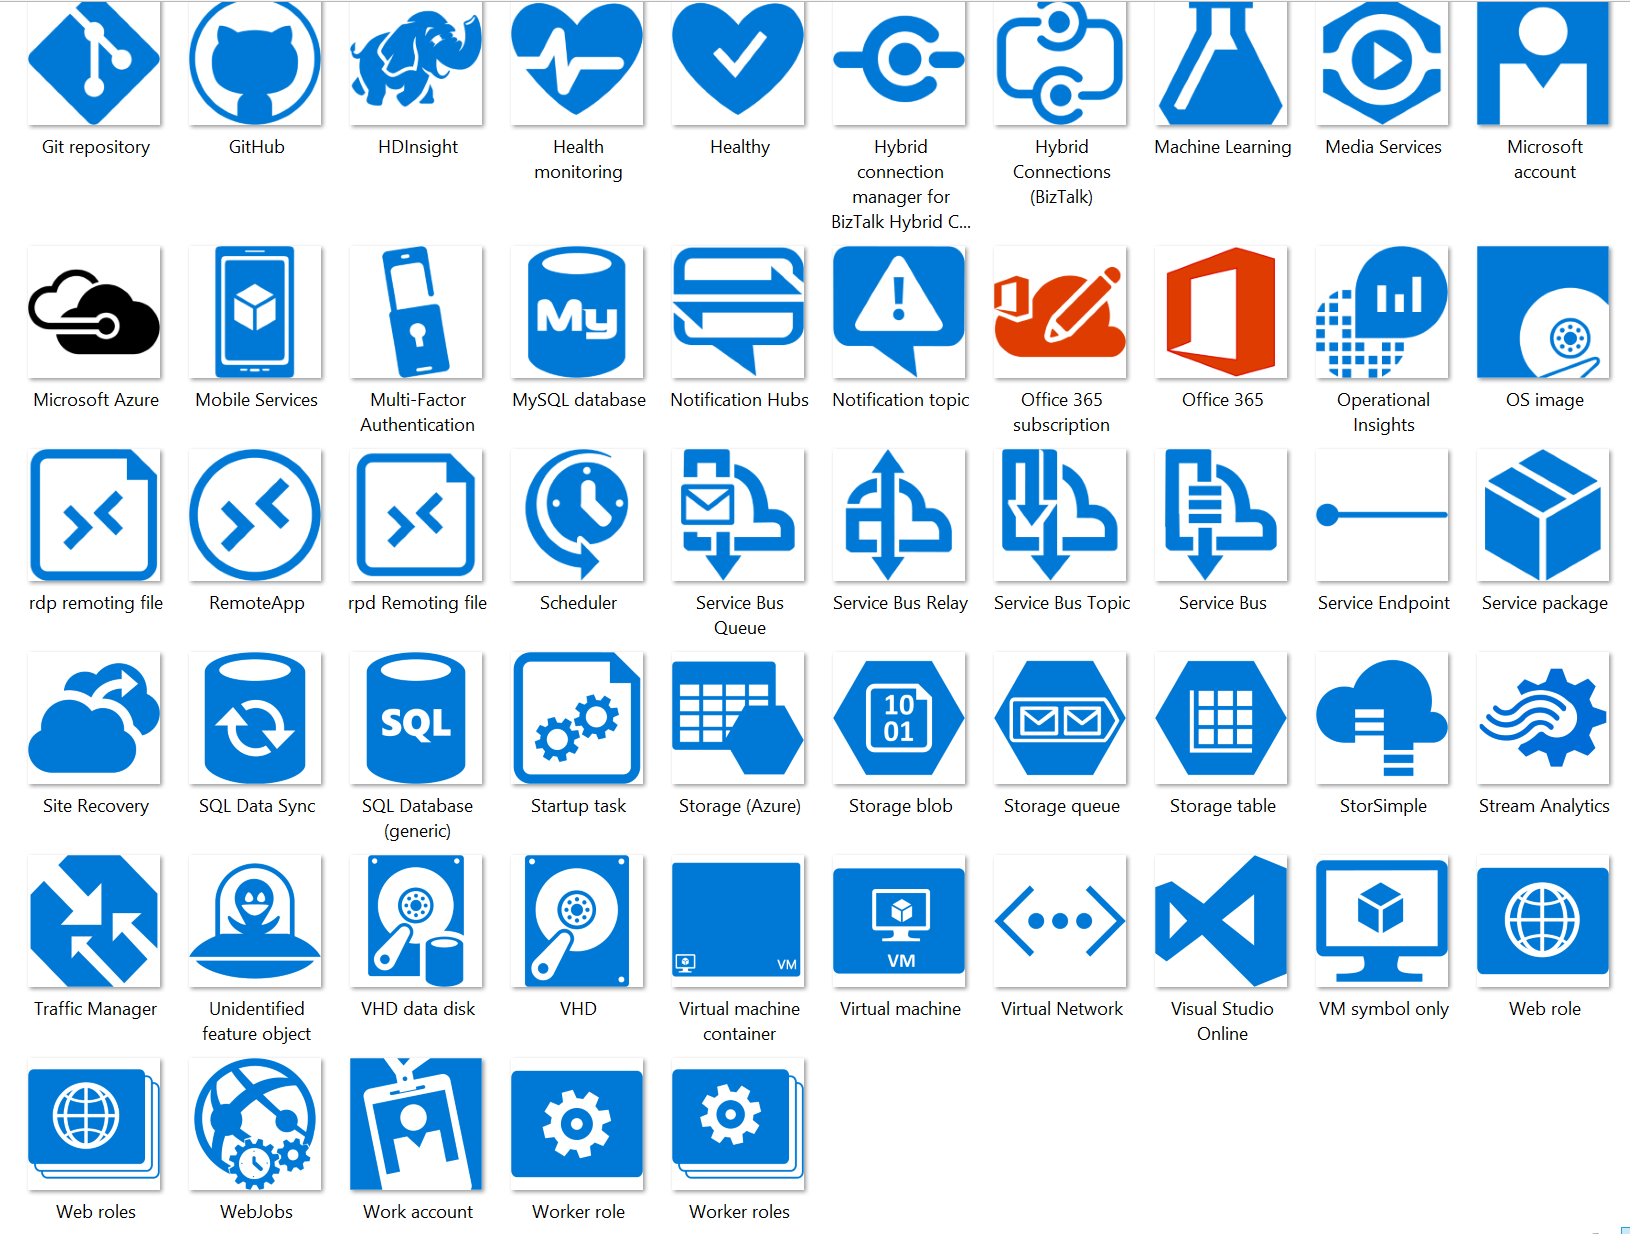 Clipart Icons for PowerPoint - SlideModel